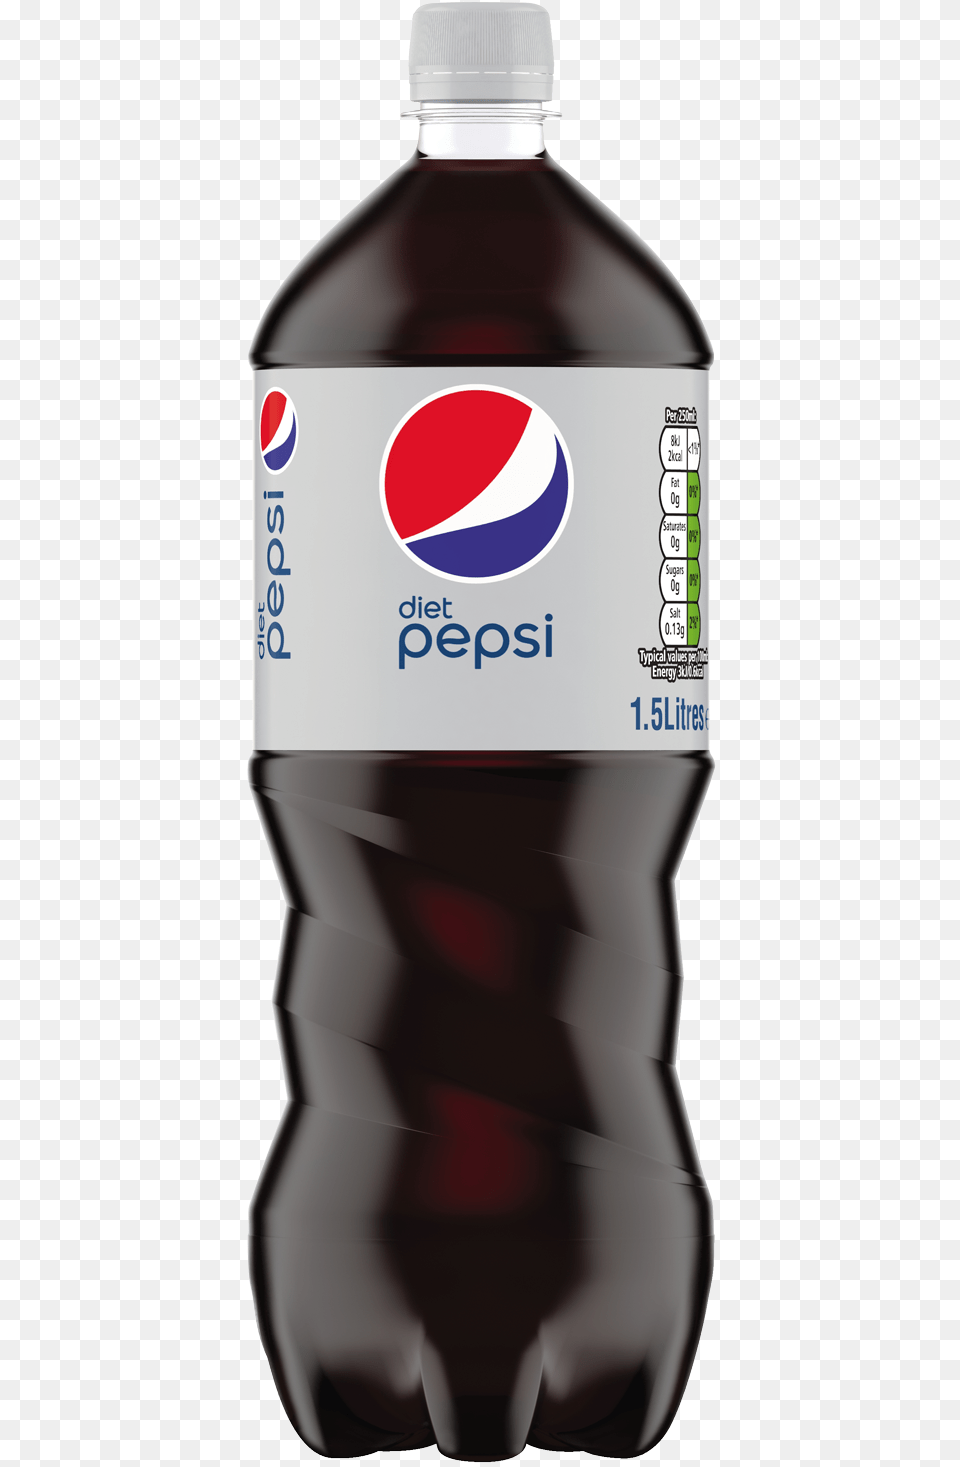 Pepsi Diet Bottle 12 X Diet Pepsi 15 L, Beverage, Soda, Coke, Shaker Png Image